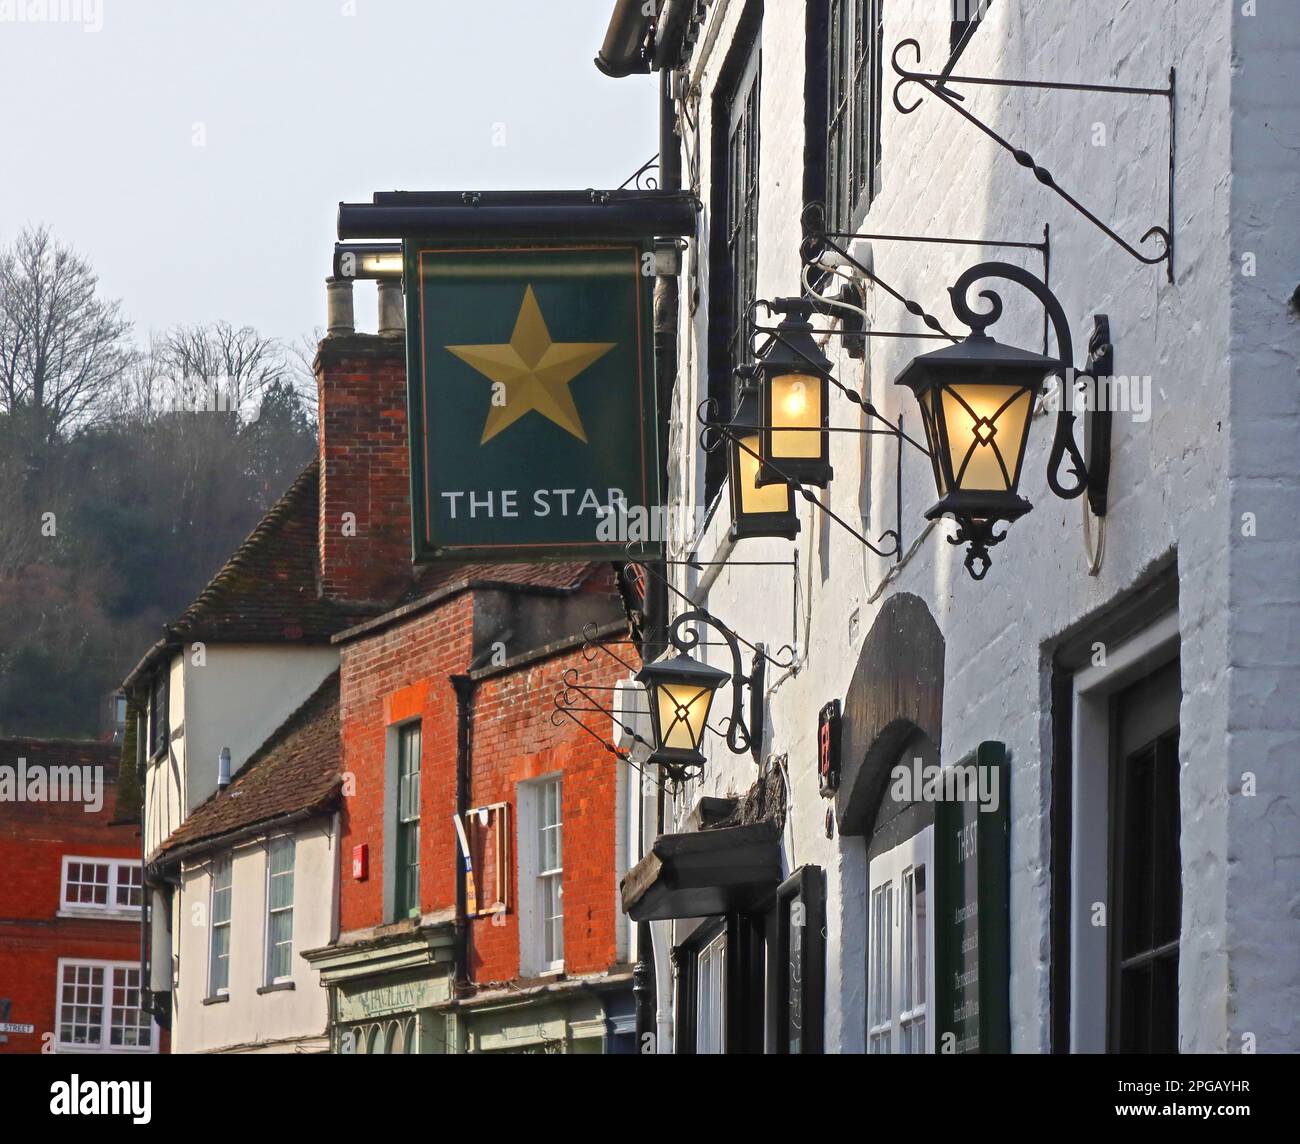 The Star Inn (mit dem CAMRA Award ausgezeichnet) Pub & Buildings, in Church Street, Godalming, Waverley, Surrey, ENGLAND, GROSSBRITANNIEN, GU7 1EL Stockfoto